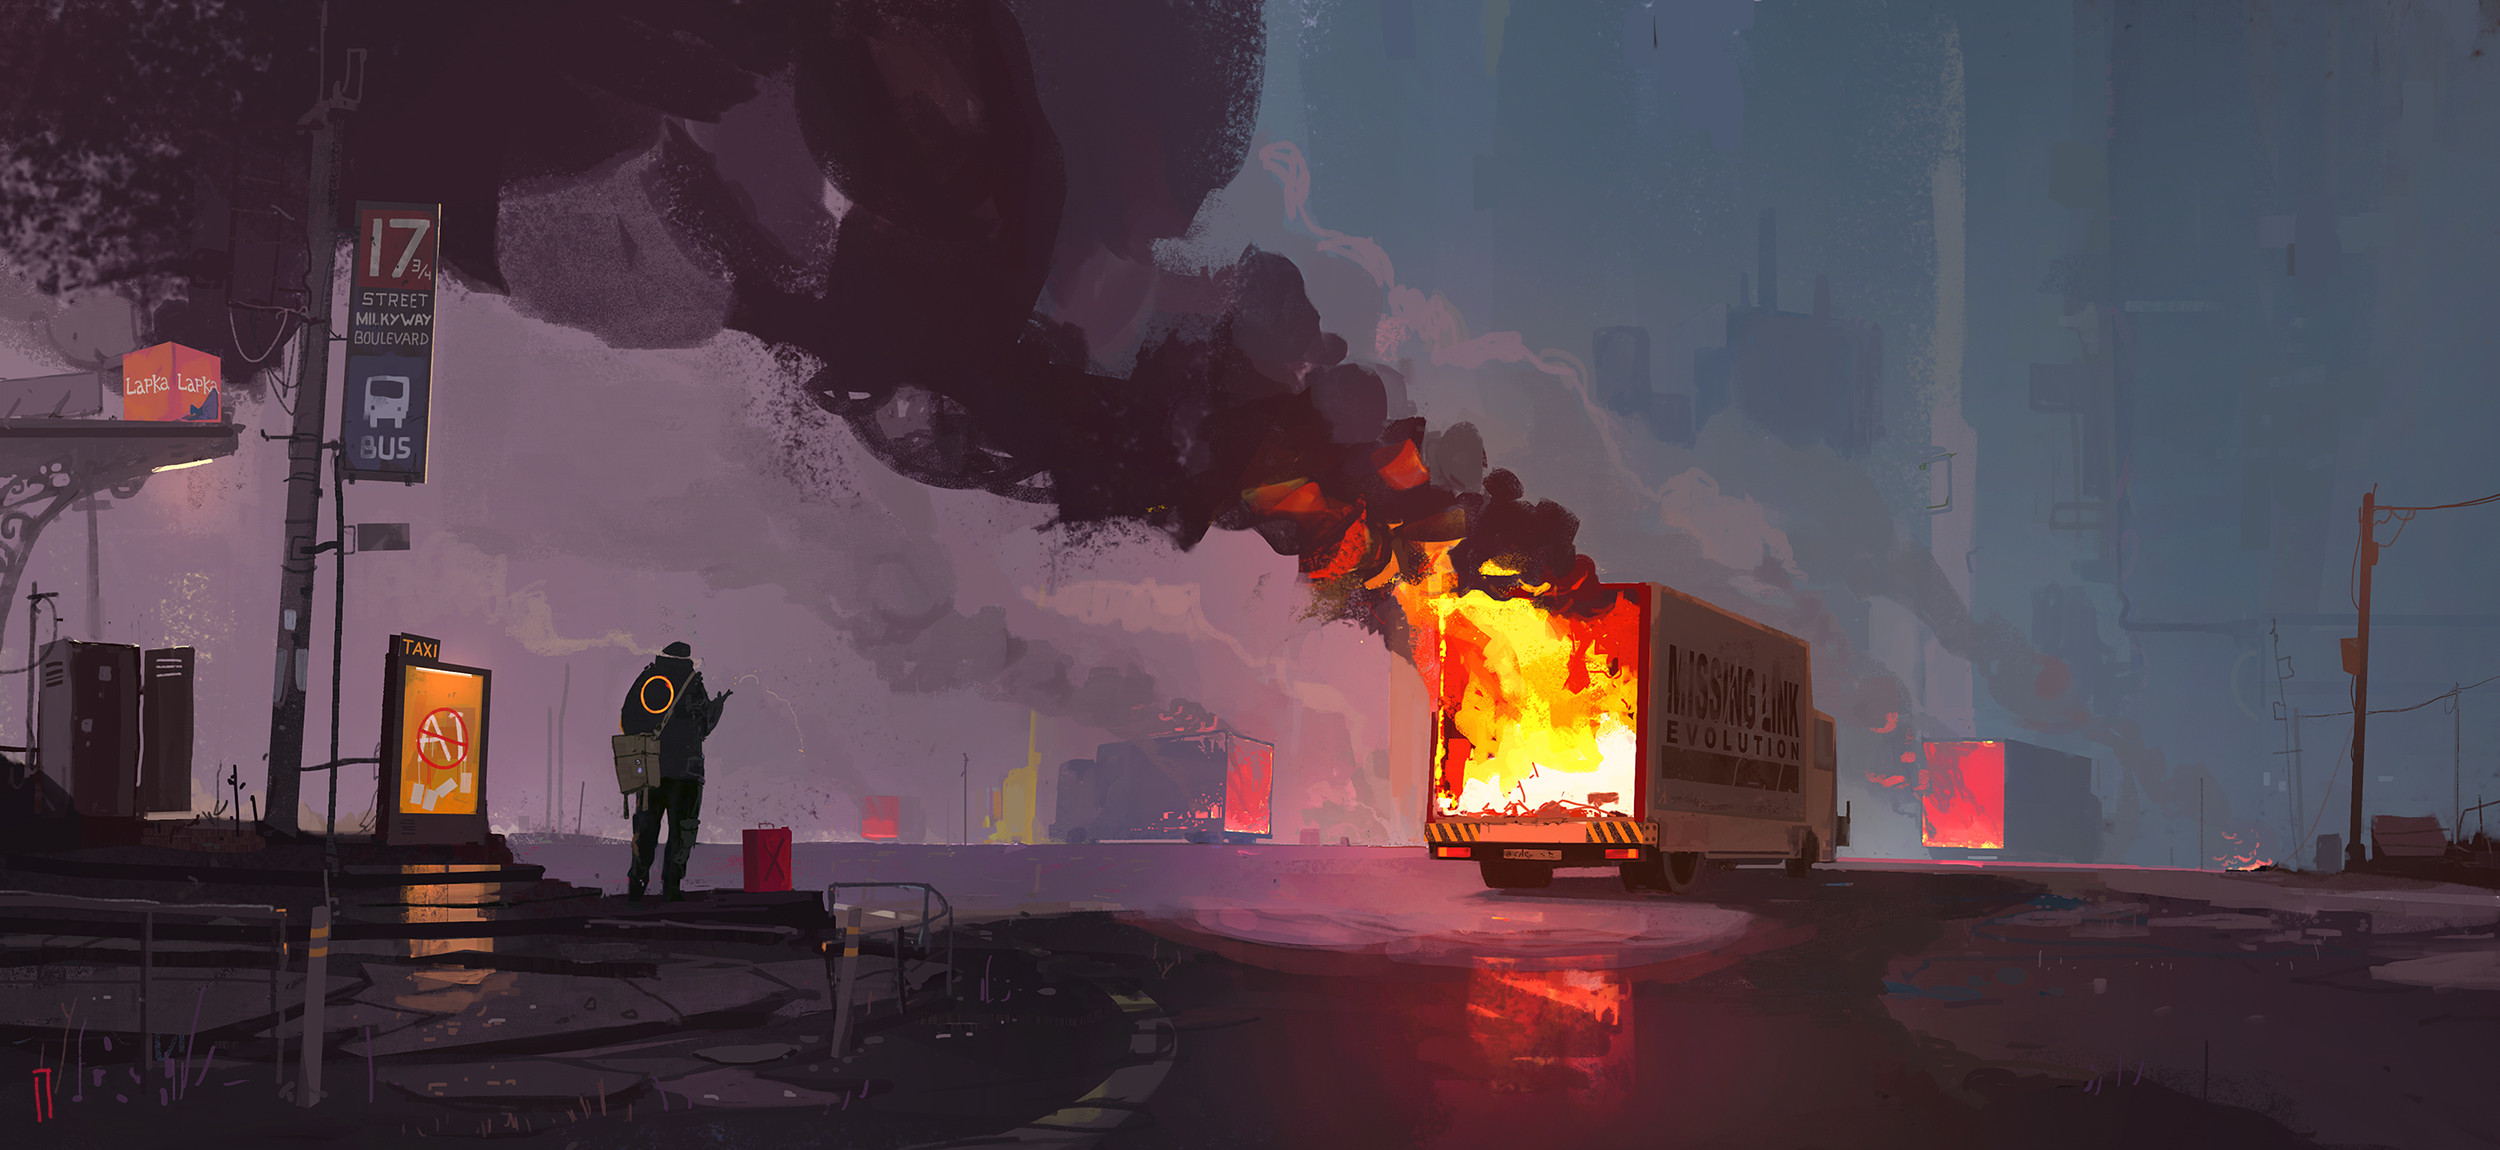 Ismail Inceoglu Digital Art Artwork Illustration Street Fire Smoke Truck Vehicle 2500x1150